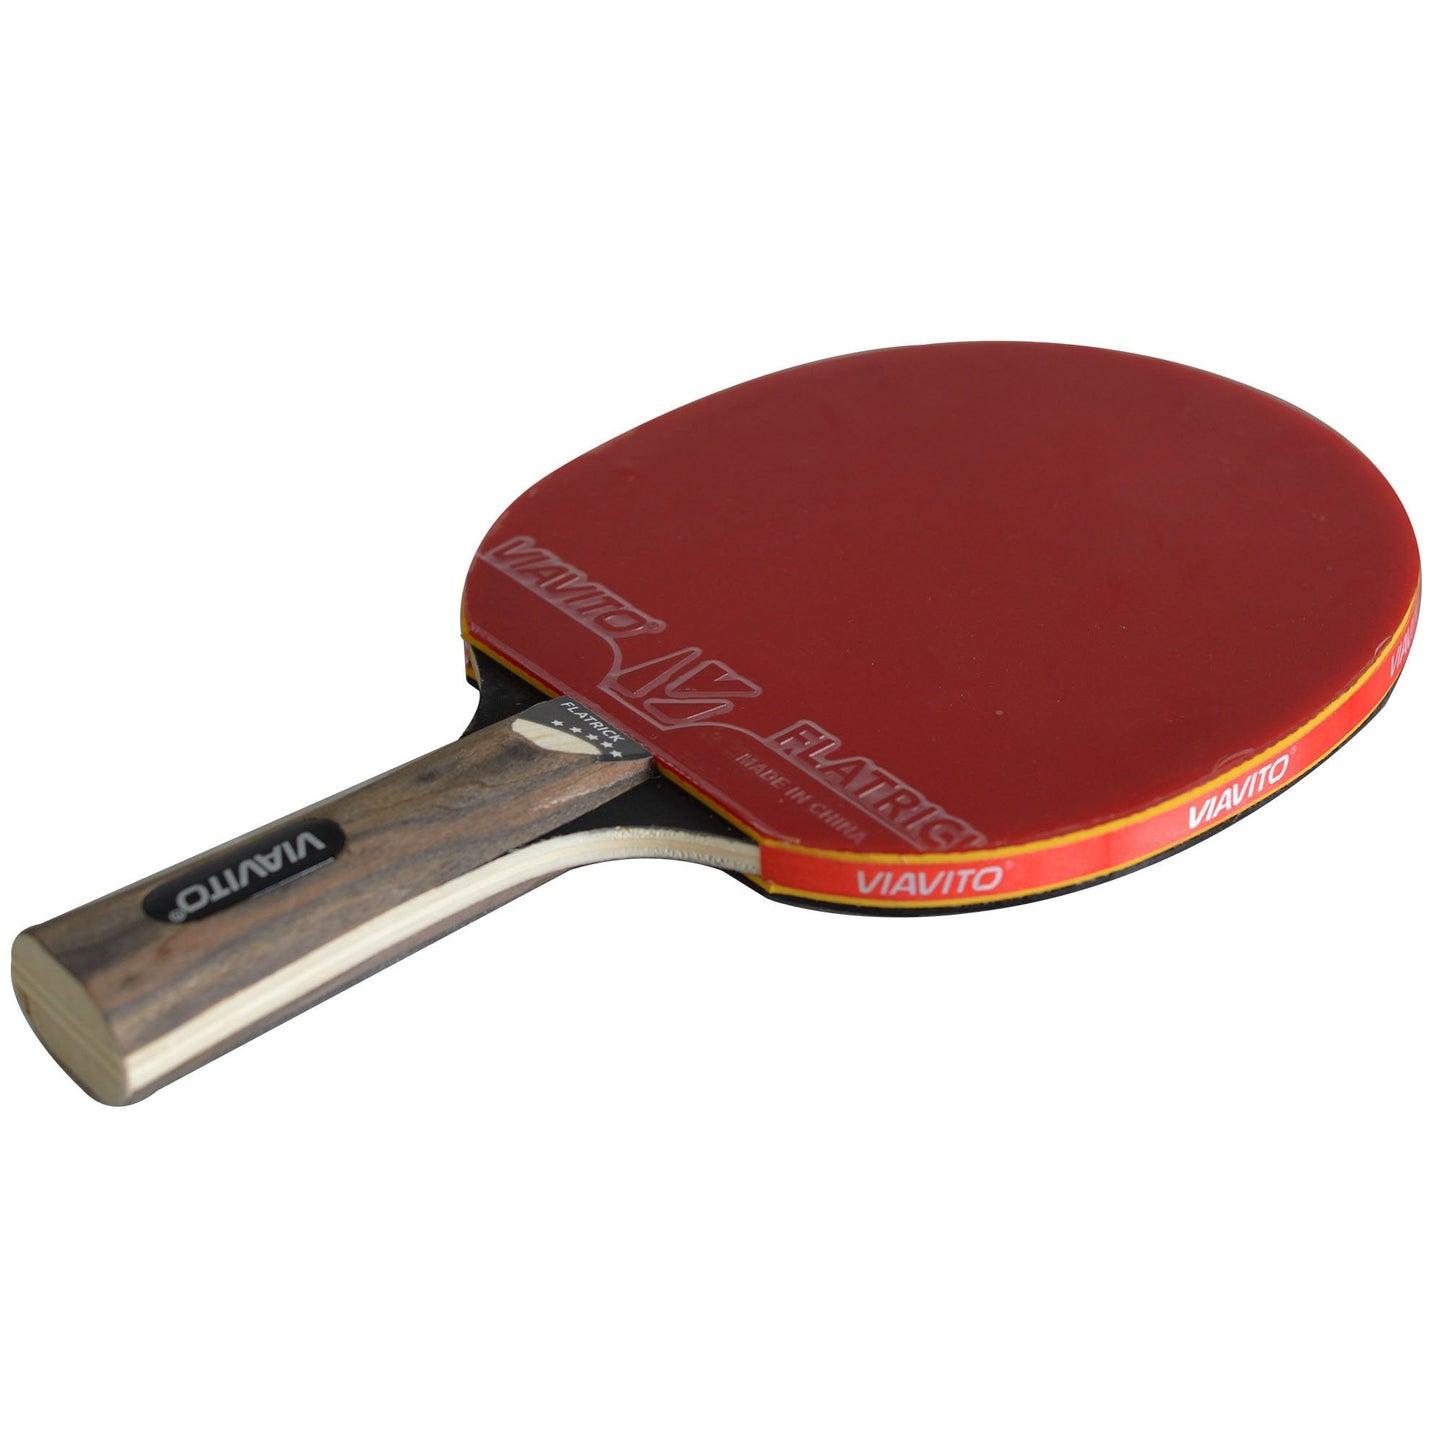 |Viavito FlaTrick Table Tennis Bat - Horizontal - Angled2|